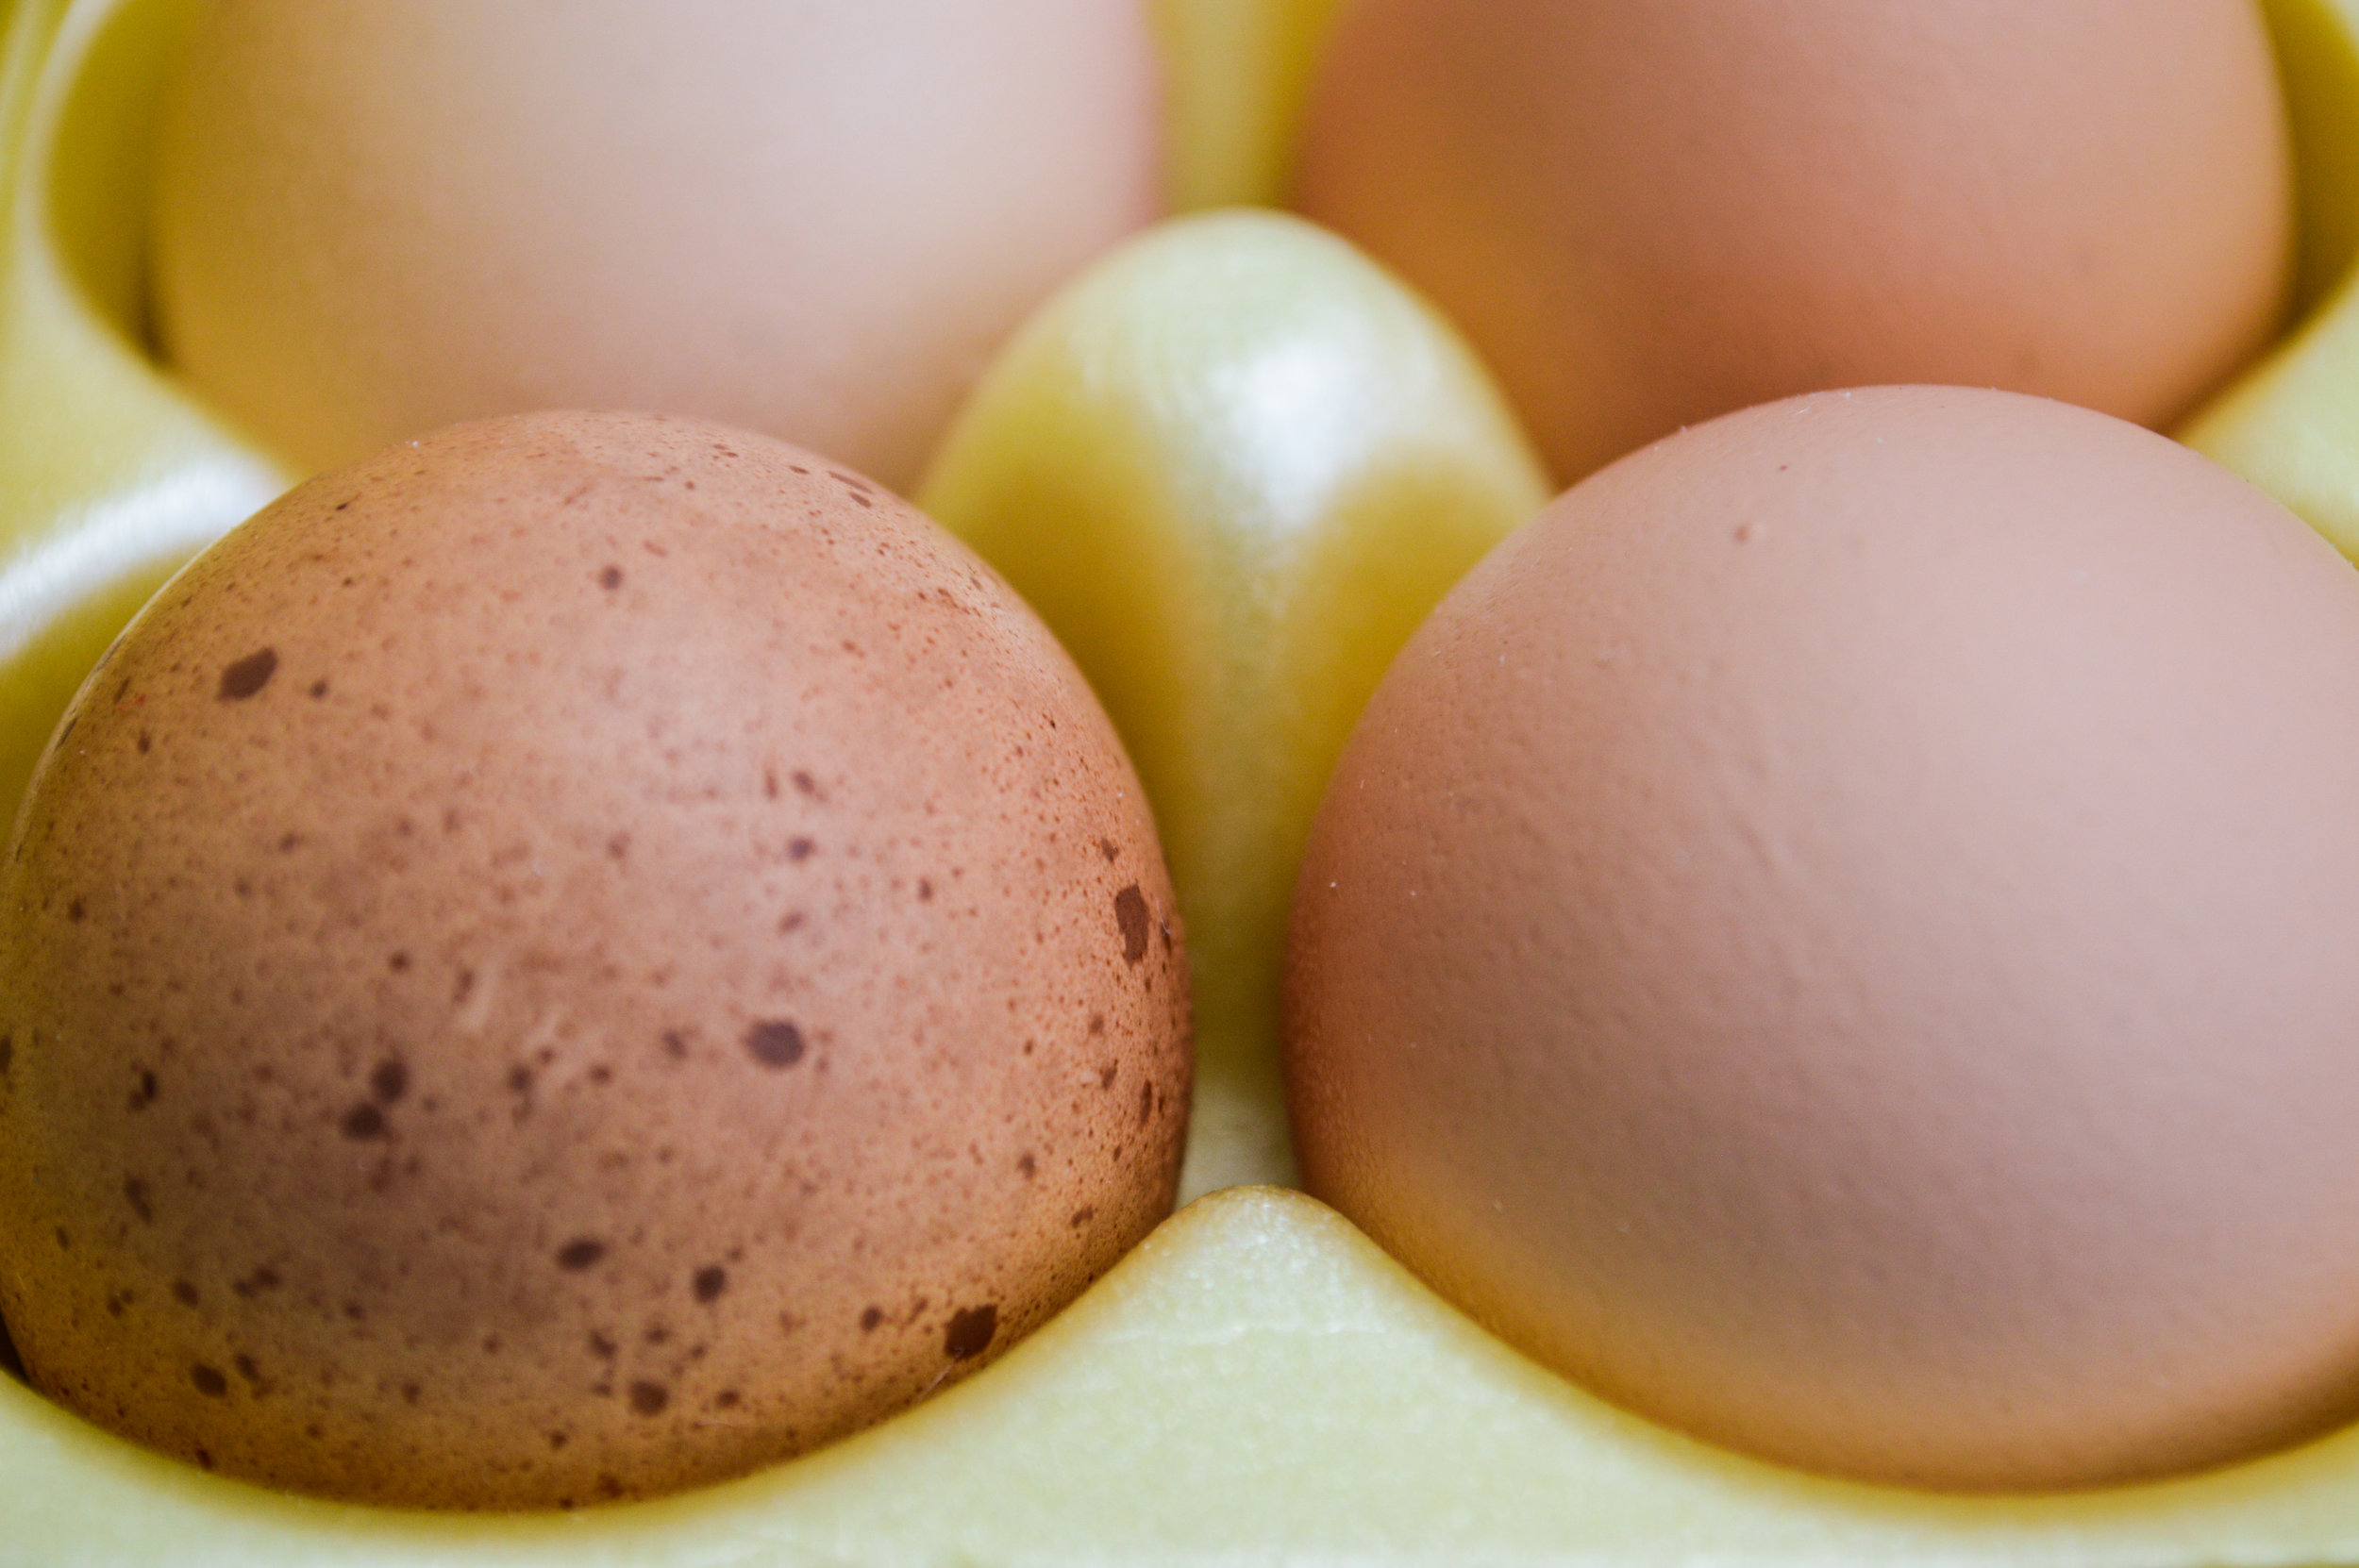 Morning Glory Farms eggs up close.jpg